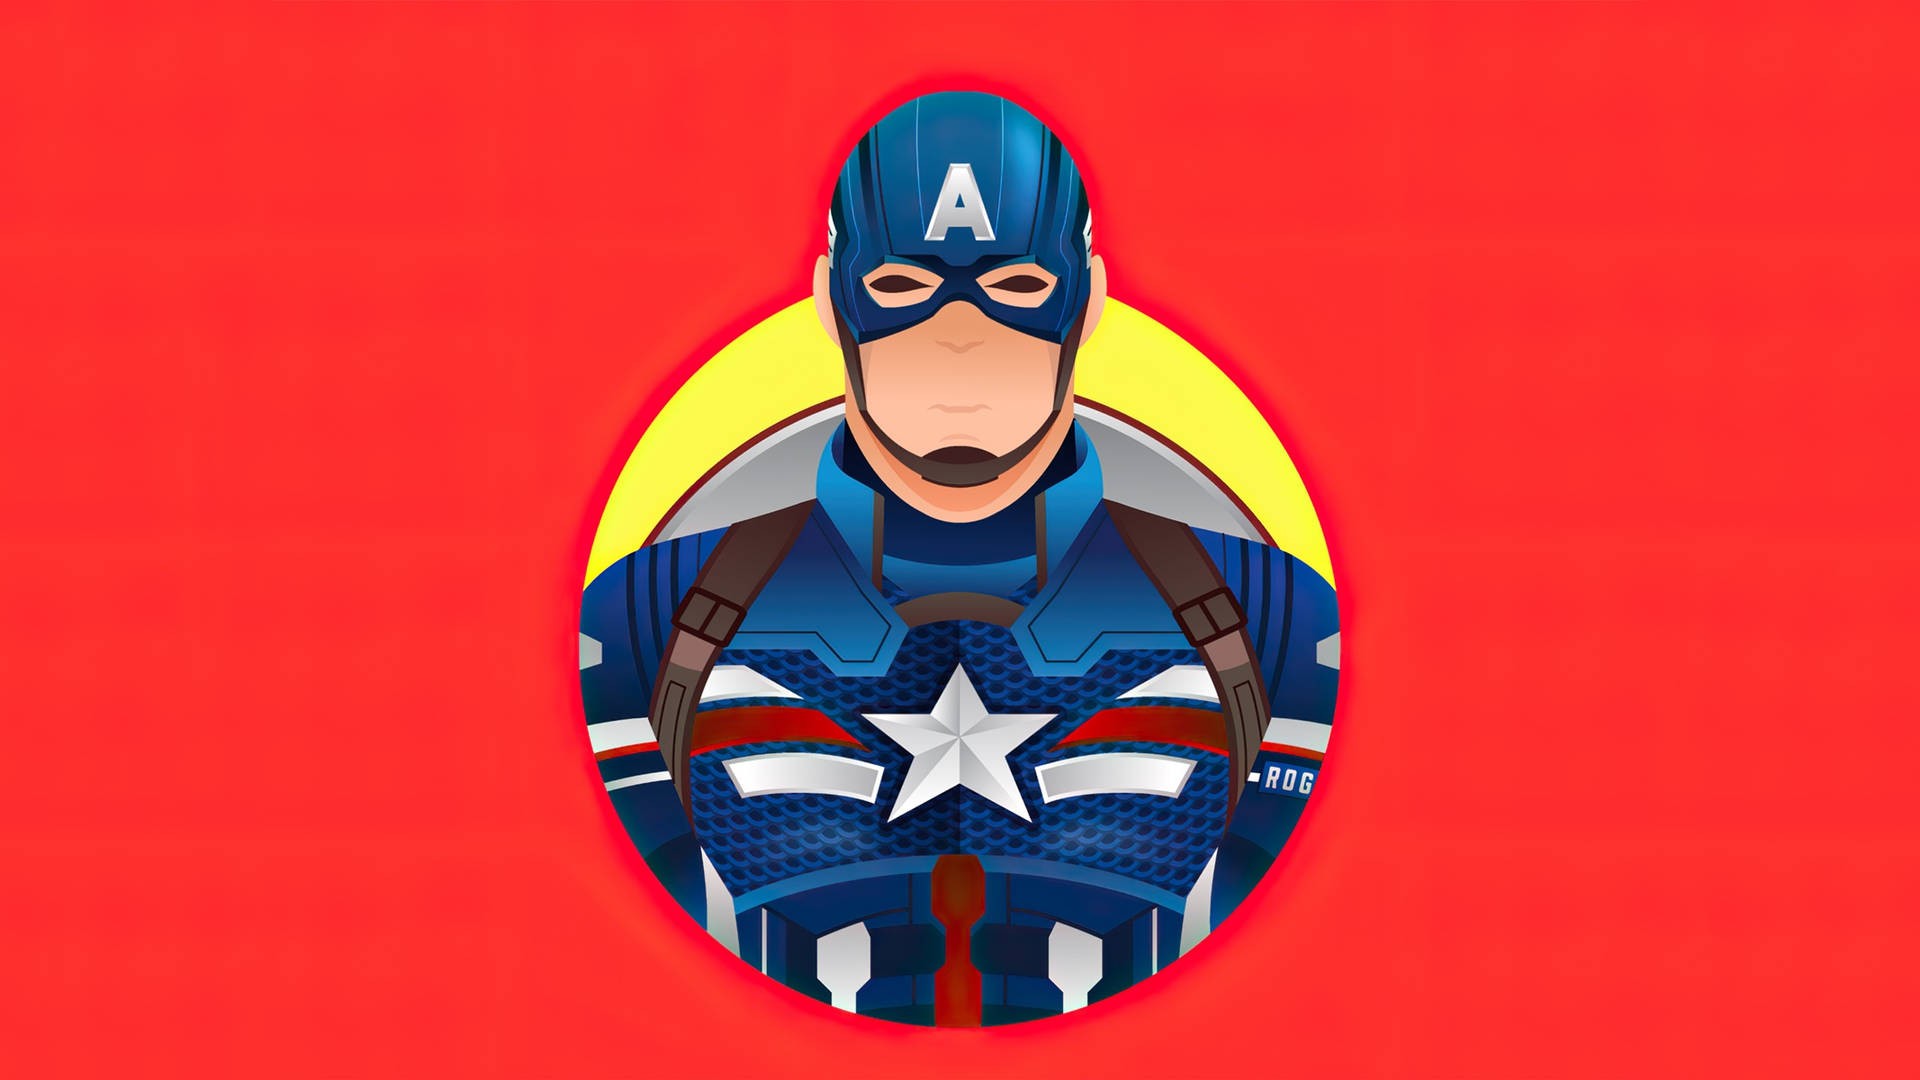 Captain America Superhero Minimalist Digital Art Background